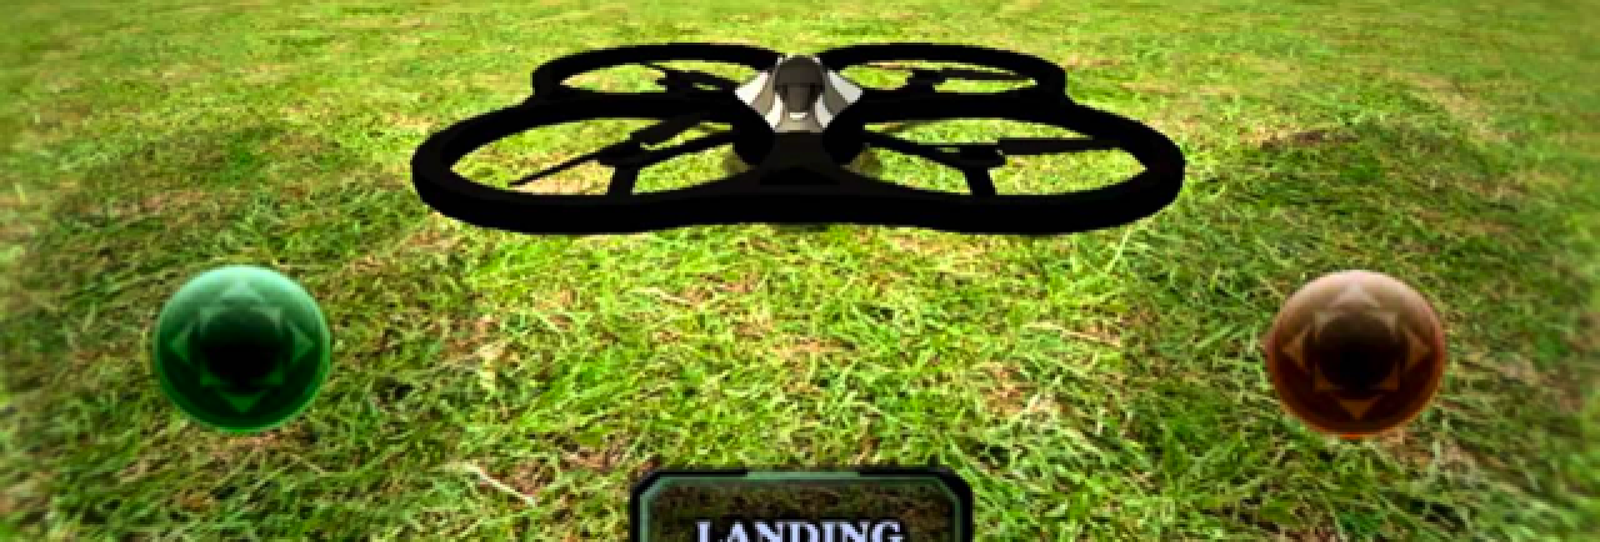 Drone Simulator, Credit: YouTube